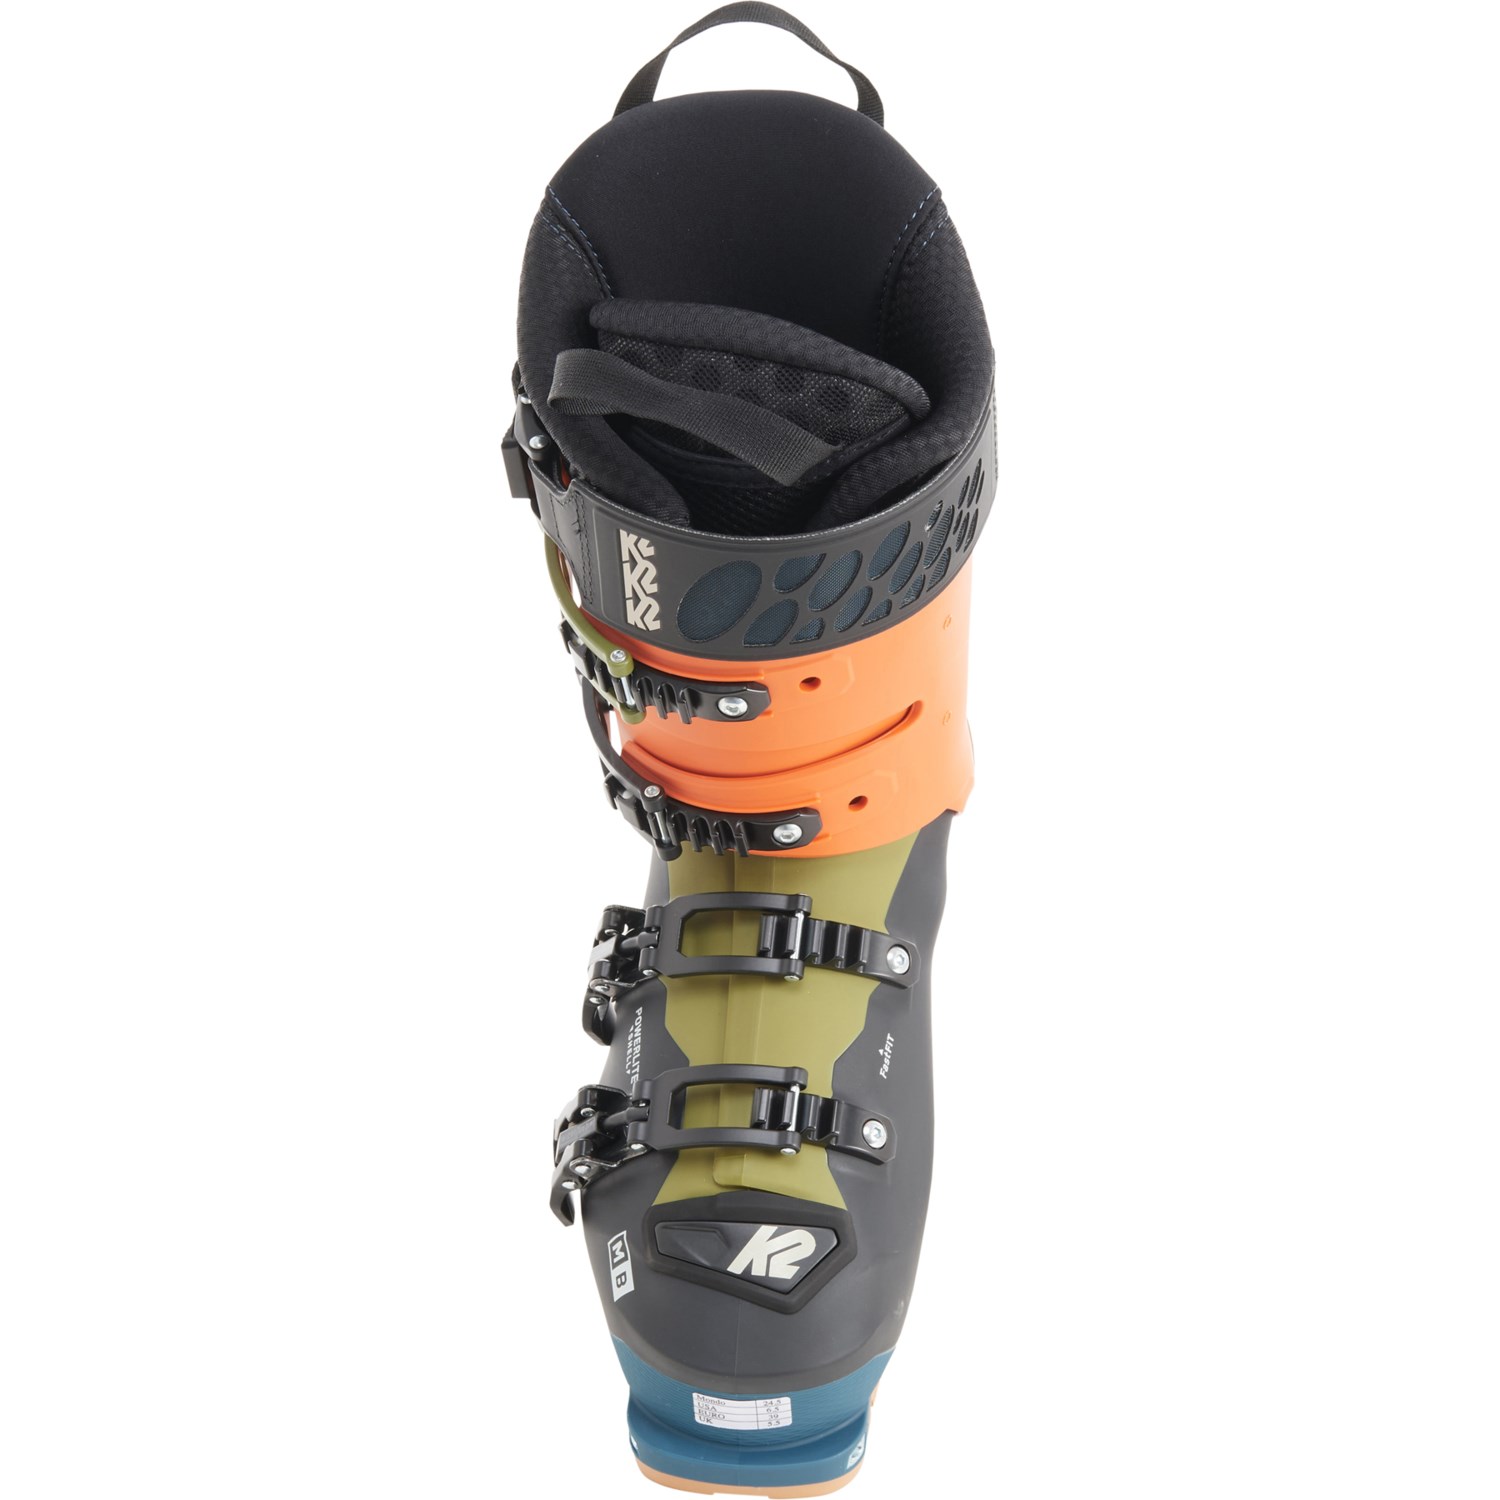 K2 Men's Mindbender 130 LV Ski Boots - PRFO Sports